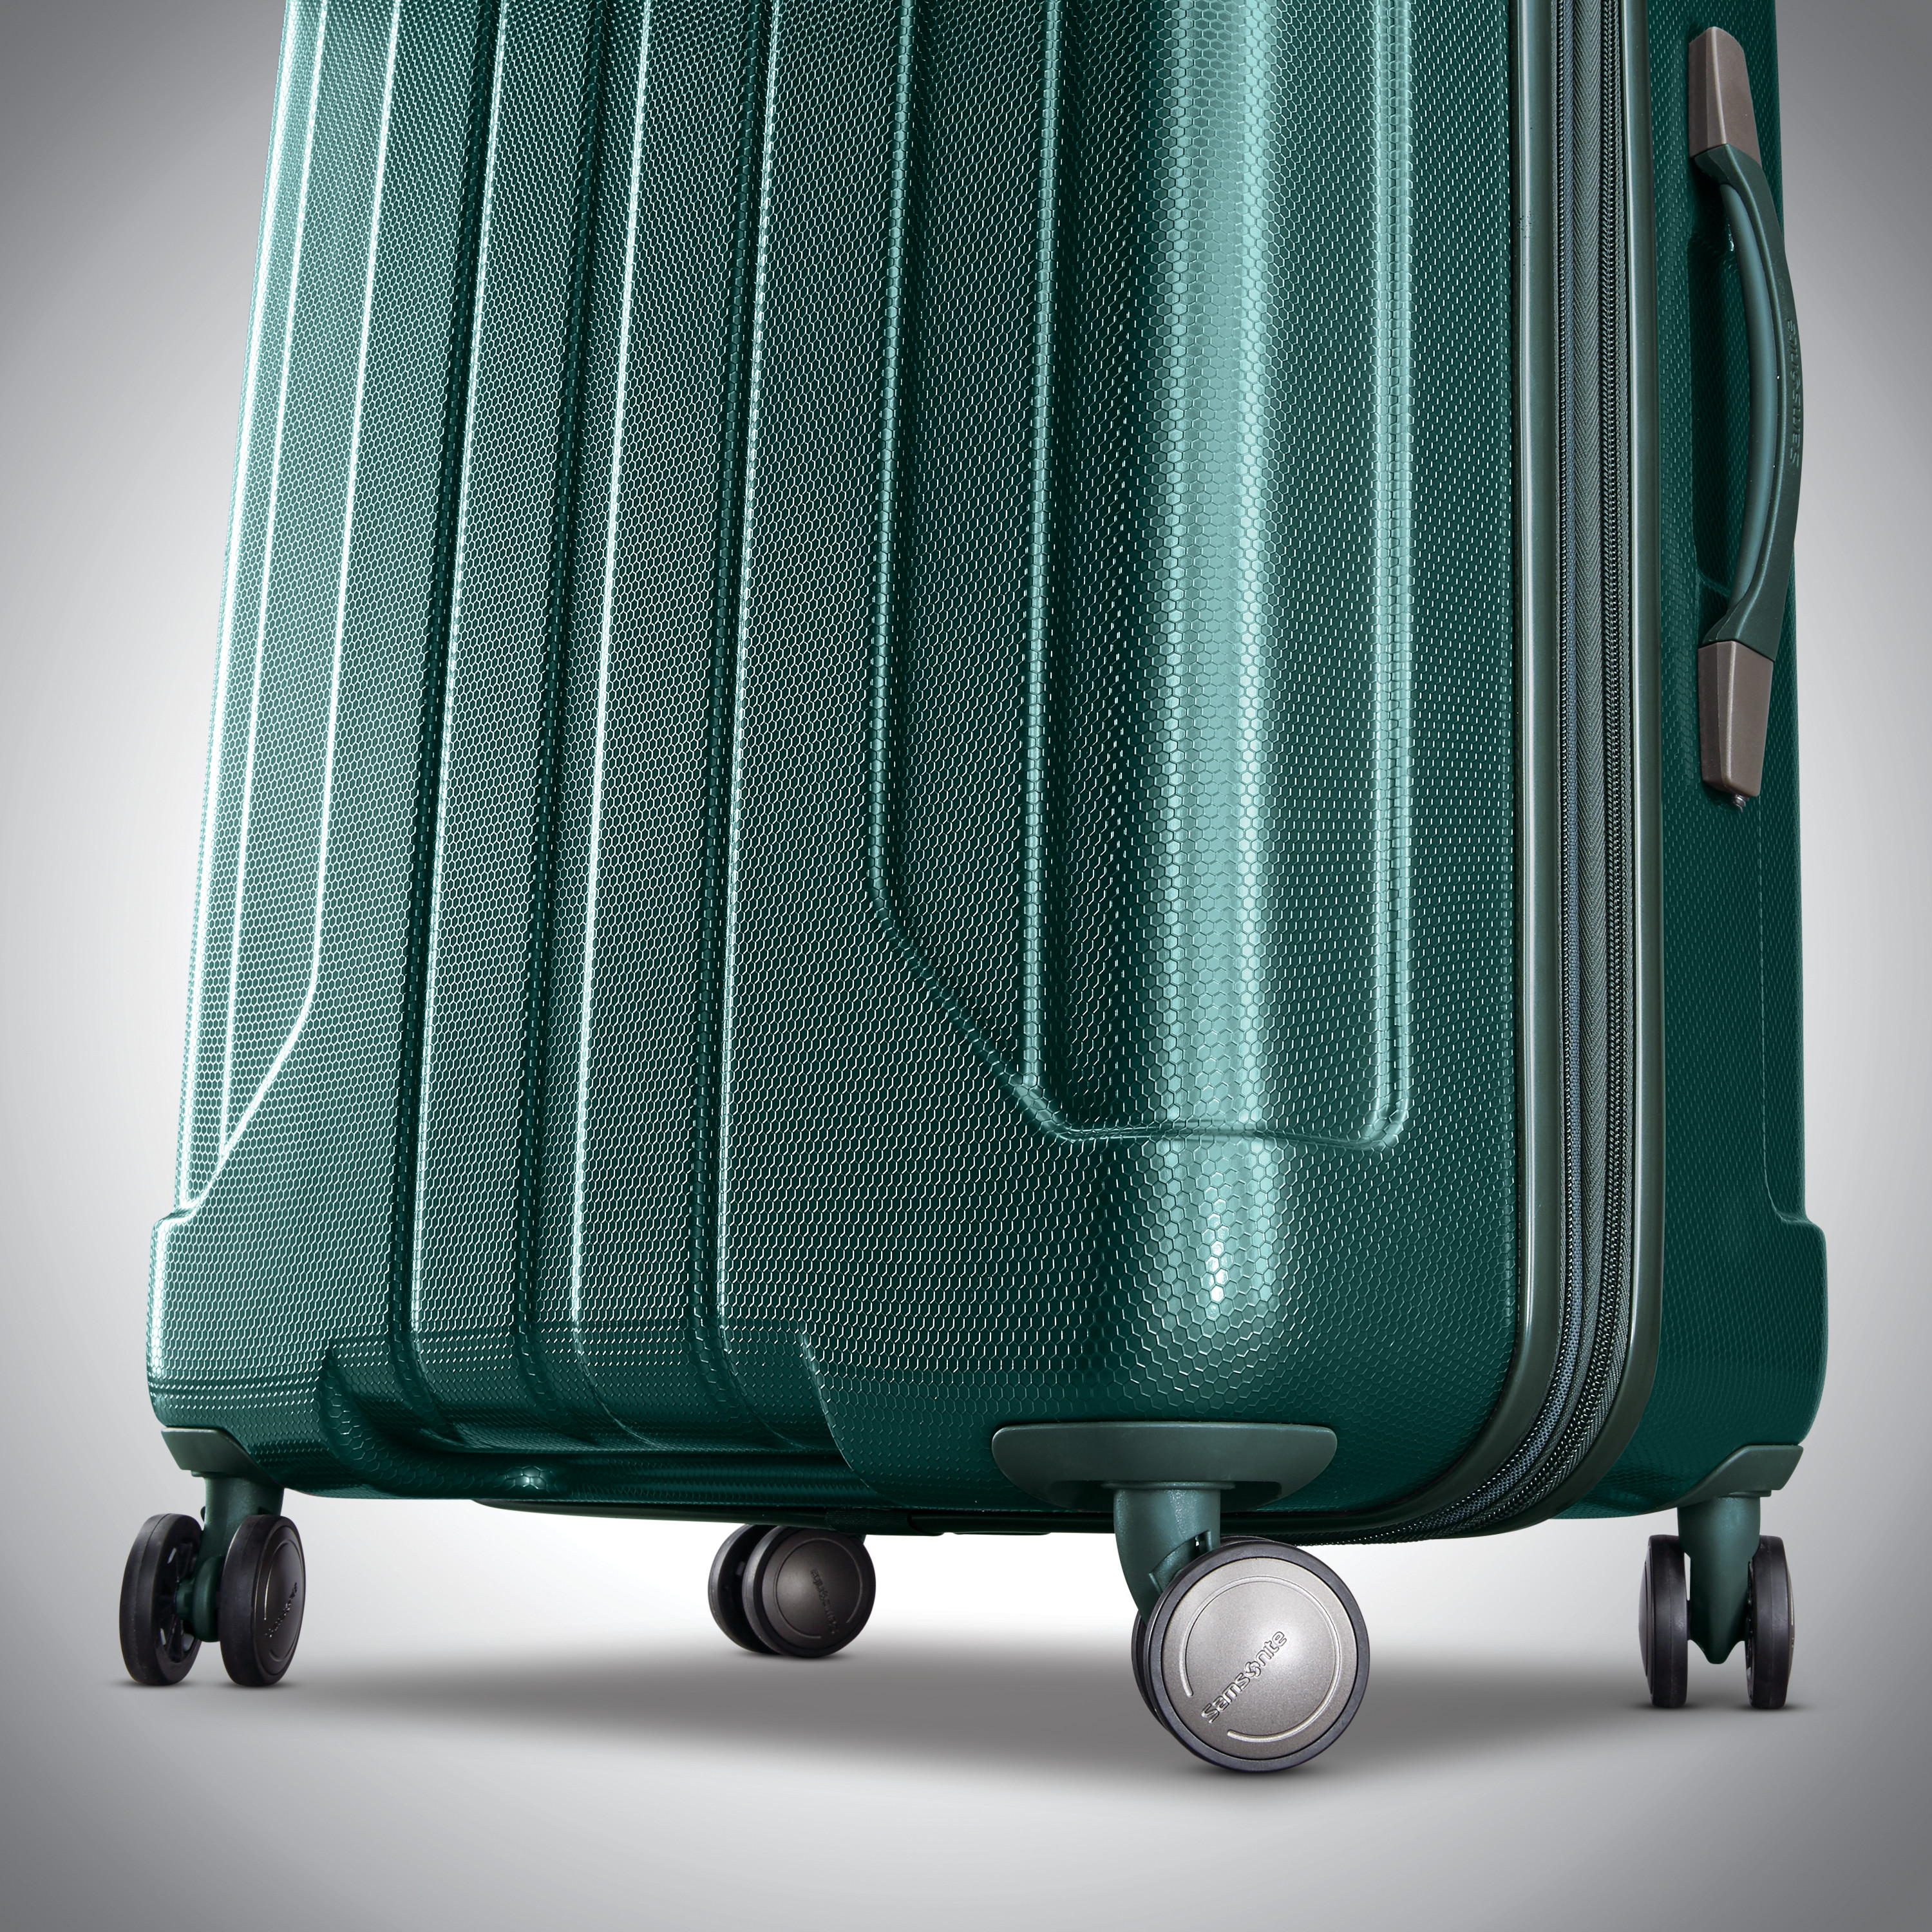 Samsonite On-Air 3 2 Piece (CO/LG) Set - Luggage